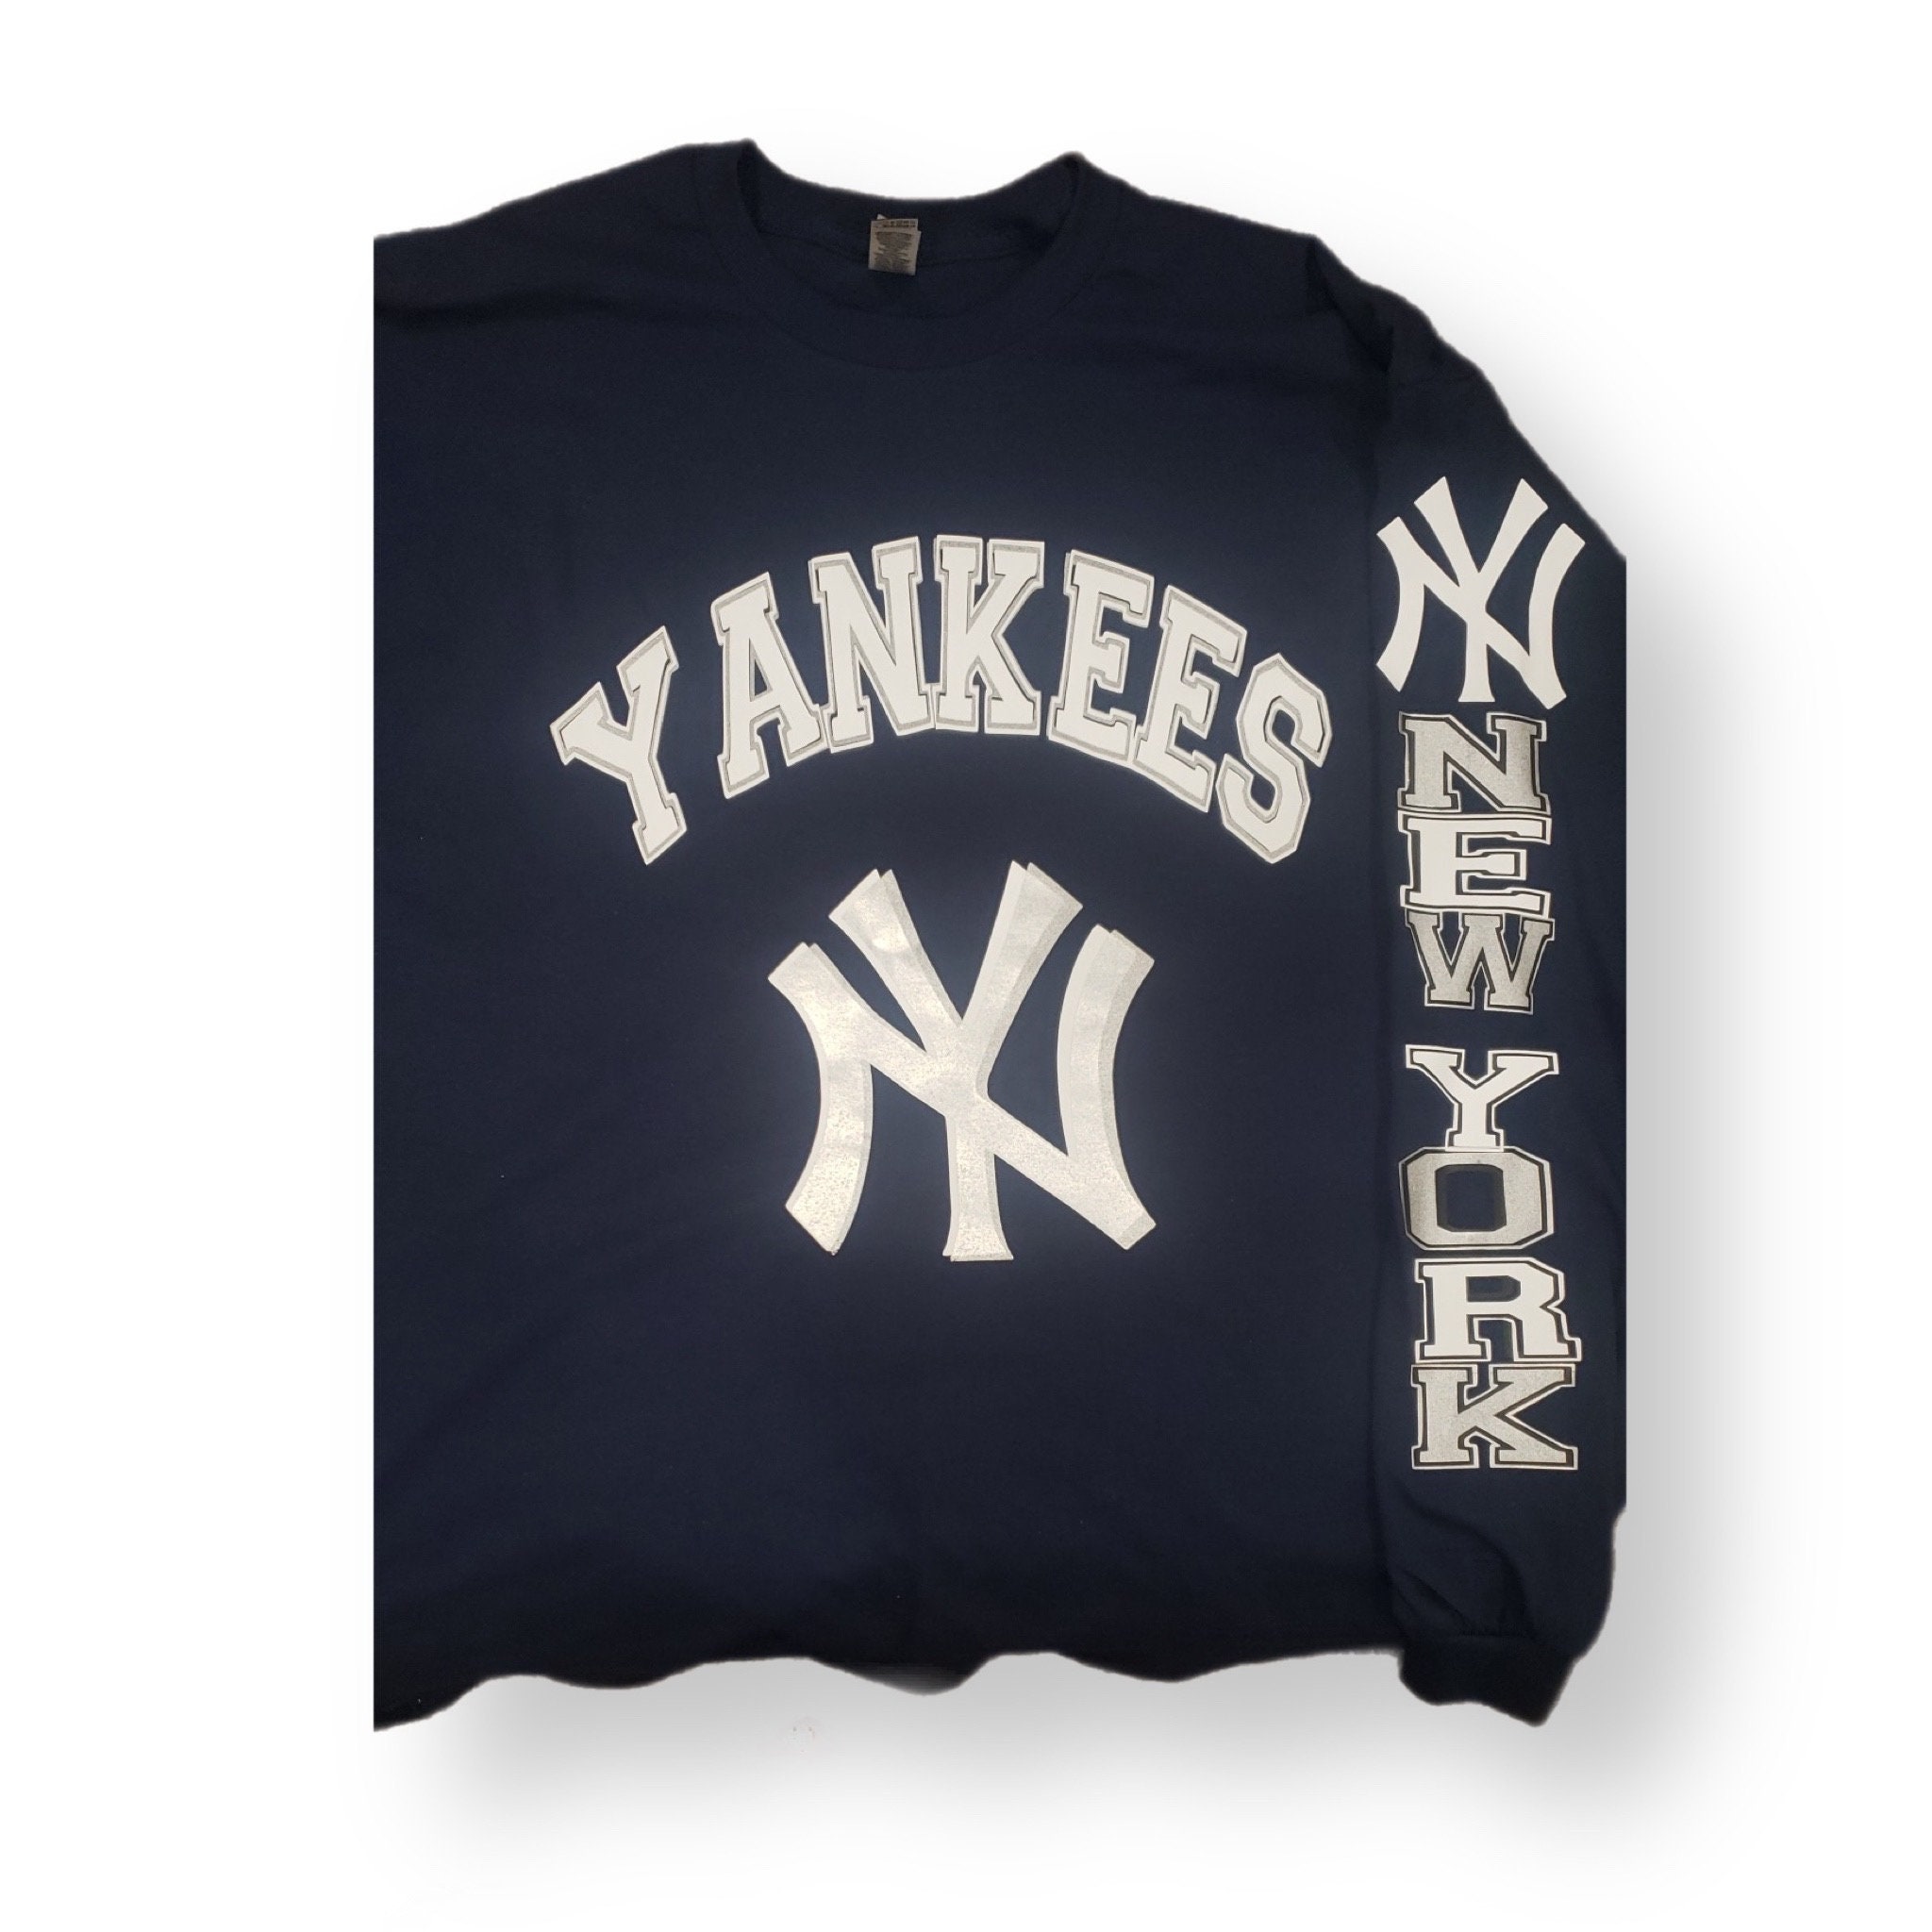 CustomCat New York Yankees Vintage MLB T-Shirt Red / M